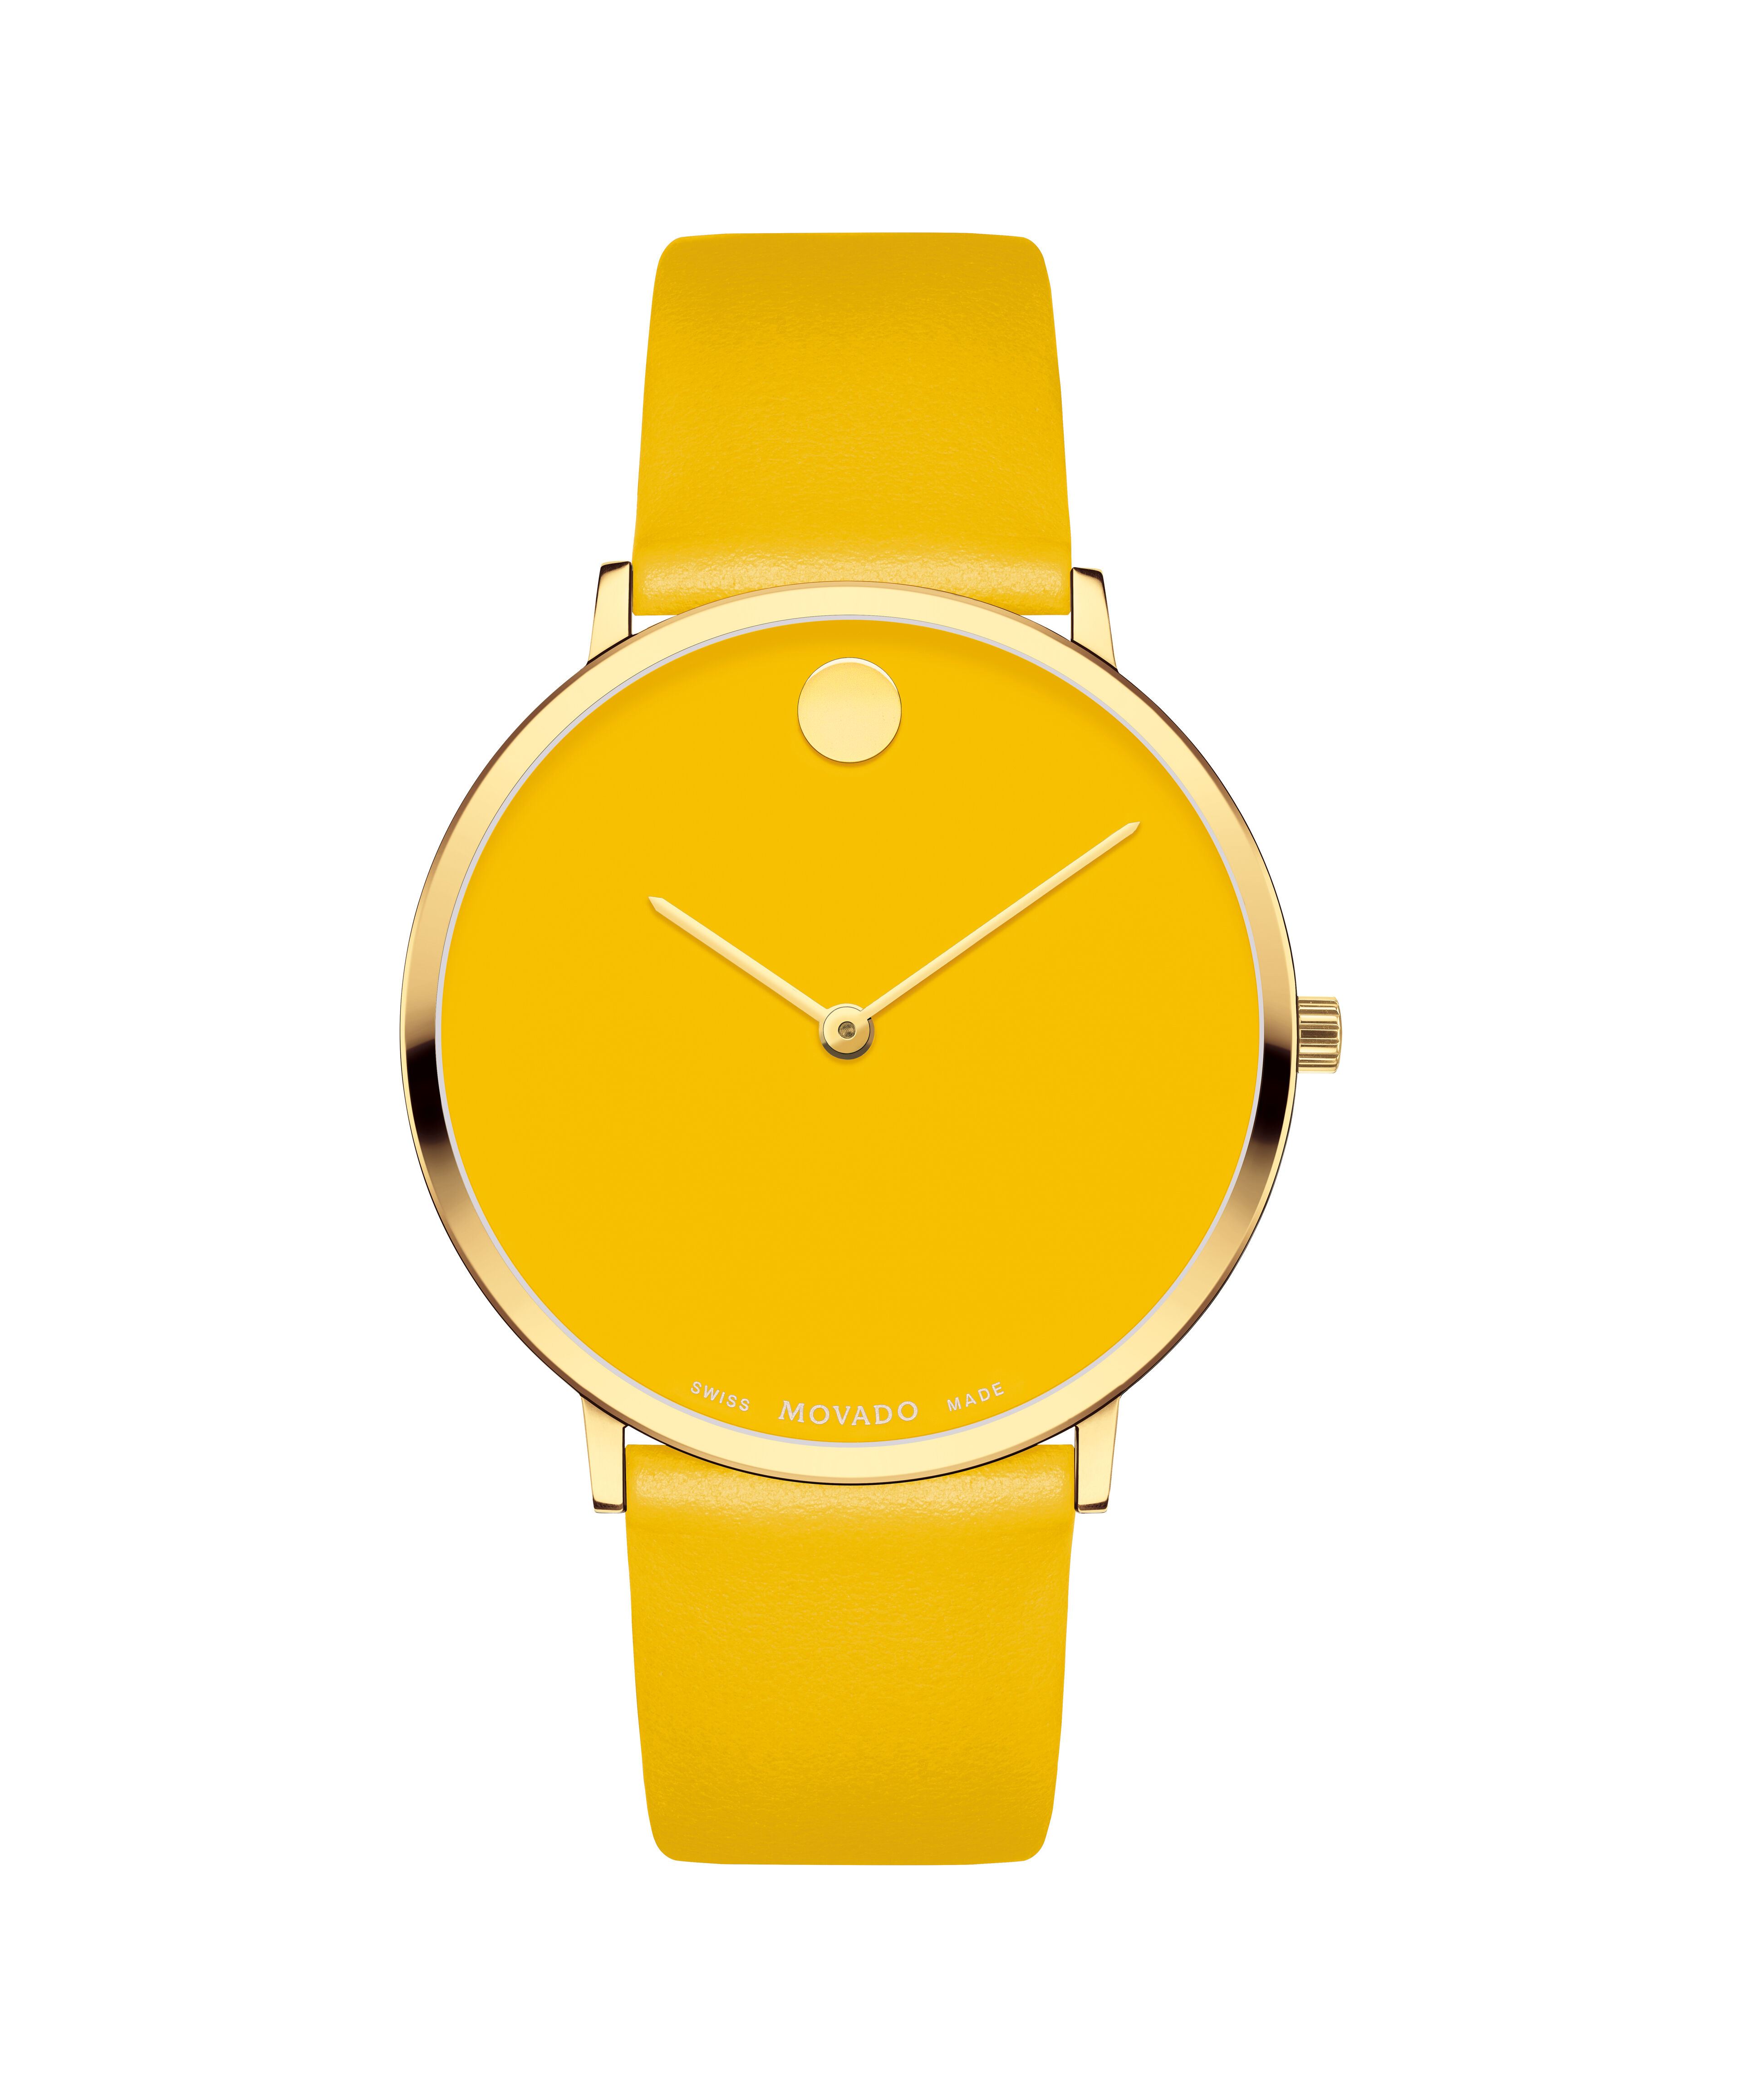 Omega Replica Watches Amazon